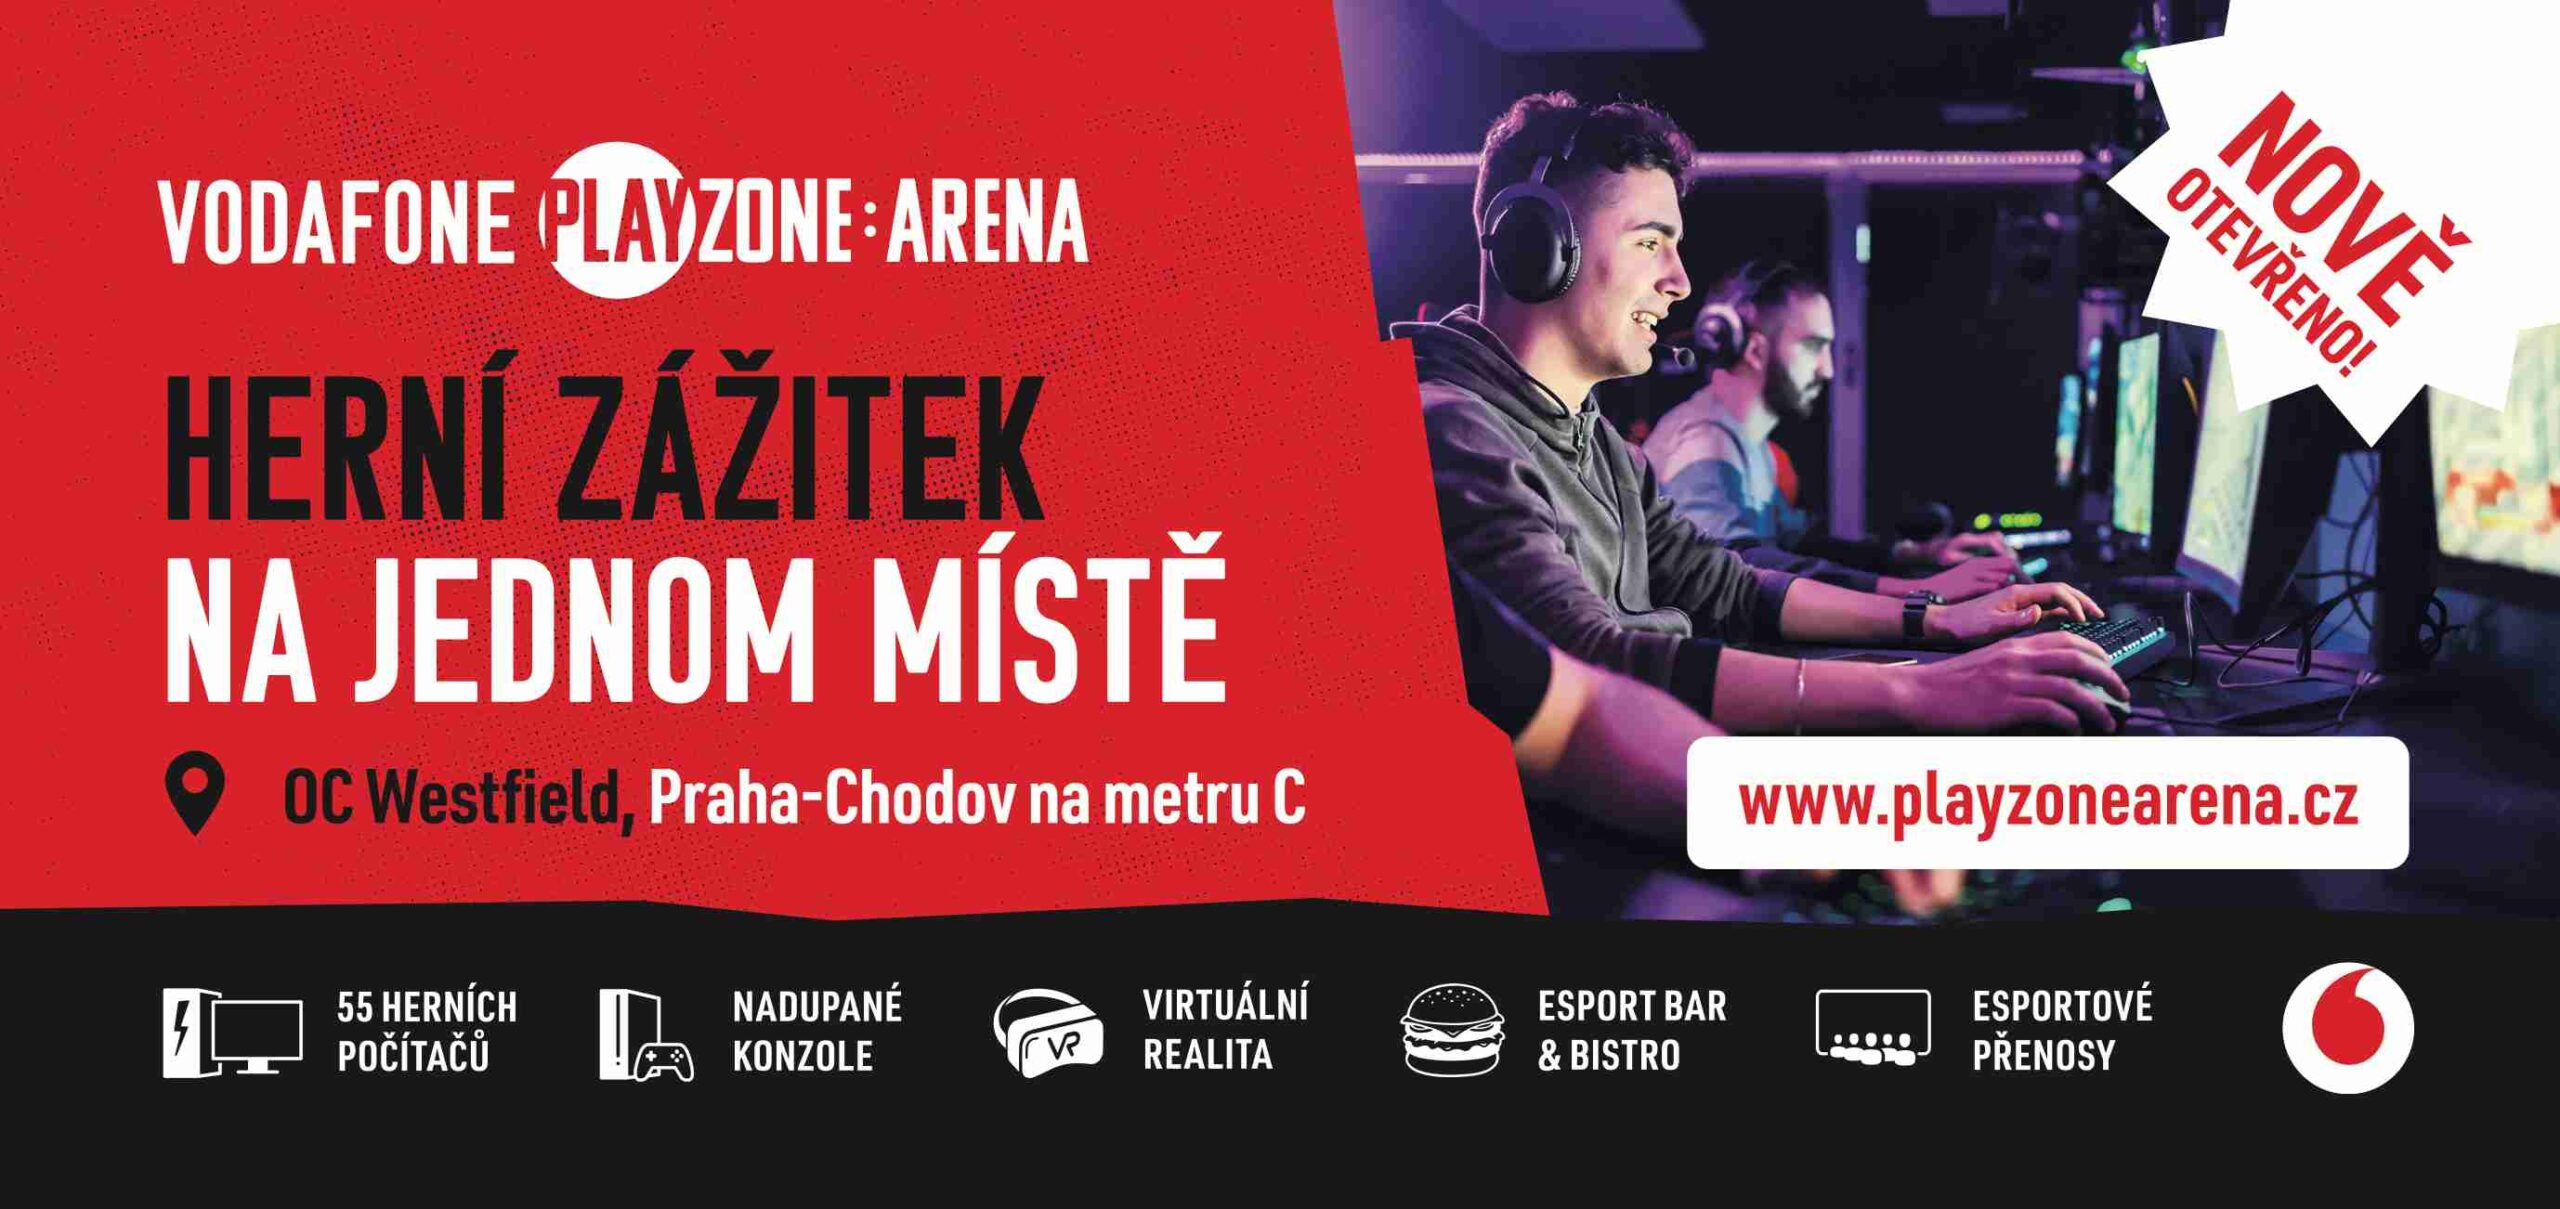 Vodafone PLAYzone Arena